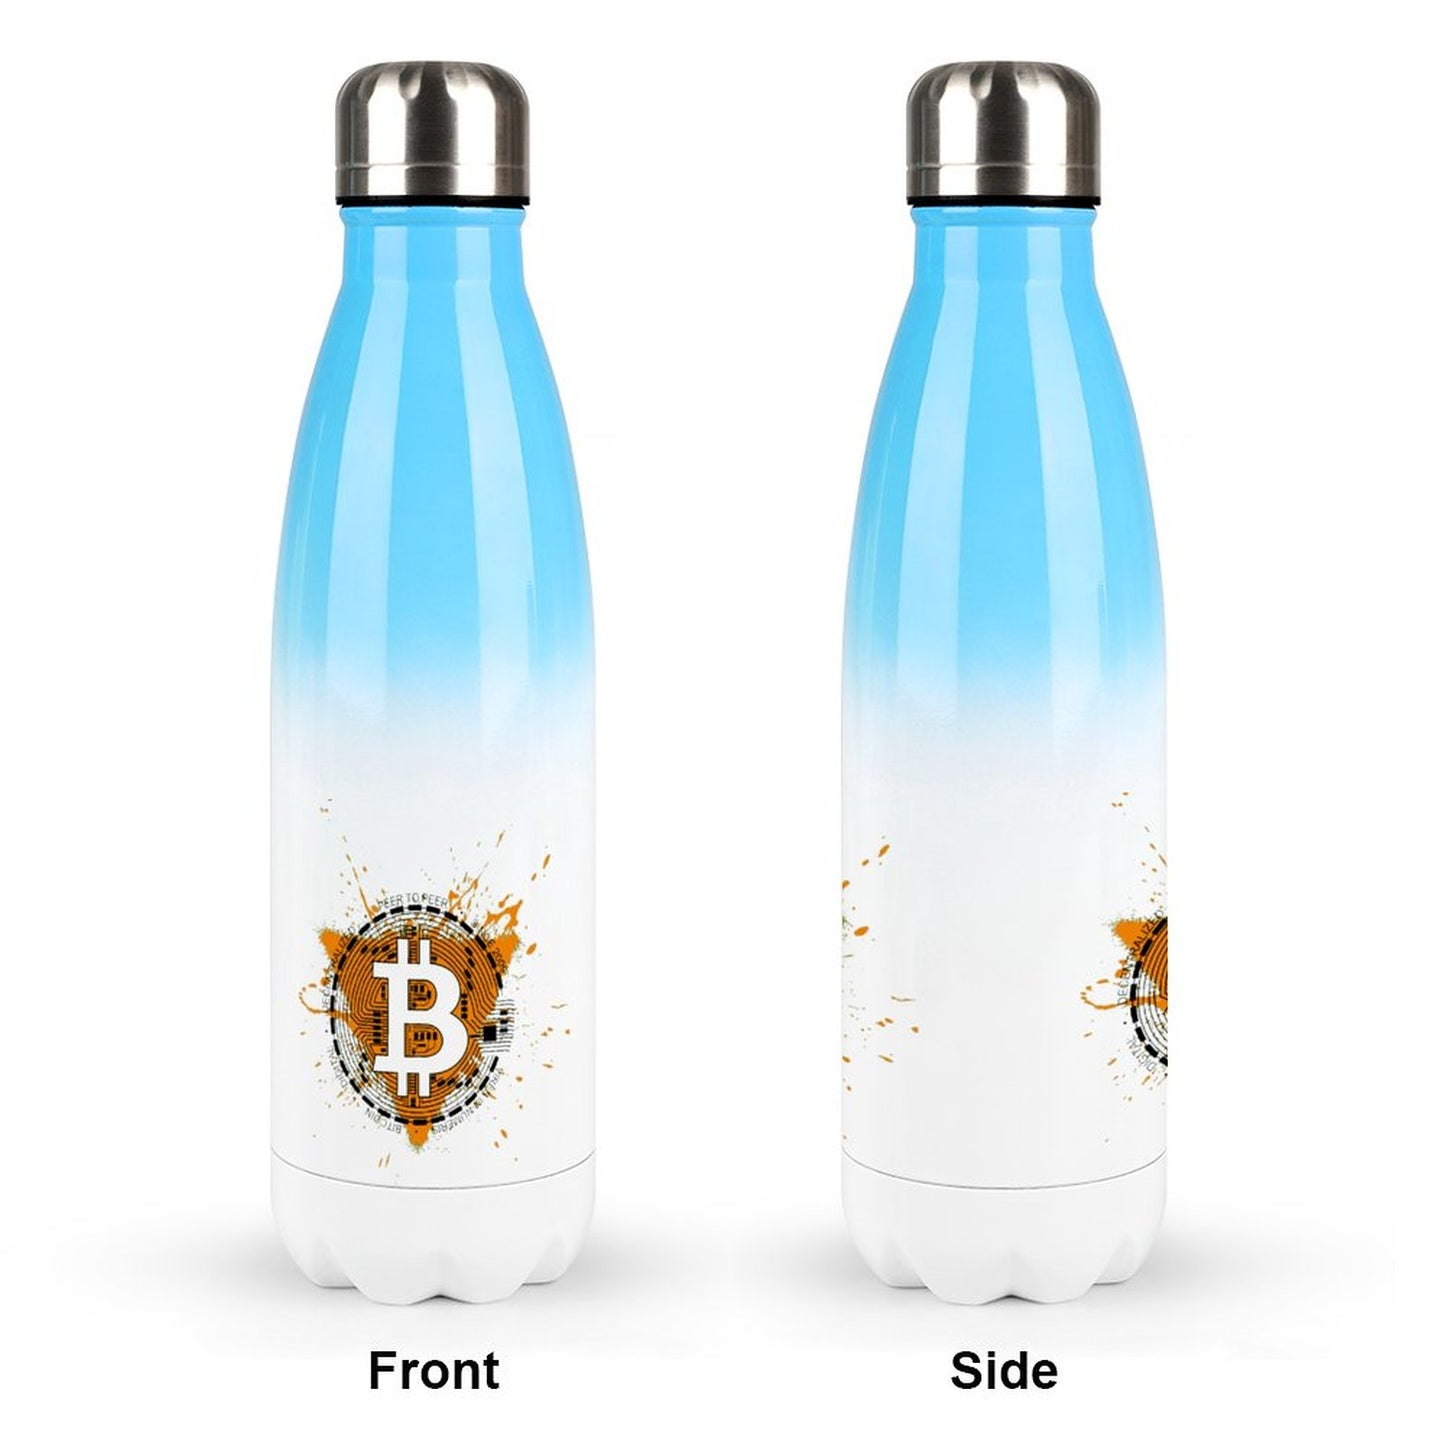 Bitcoin BTC Stainless Steel Water Bottles